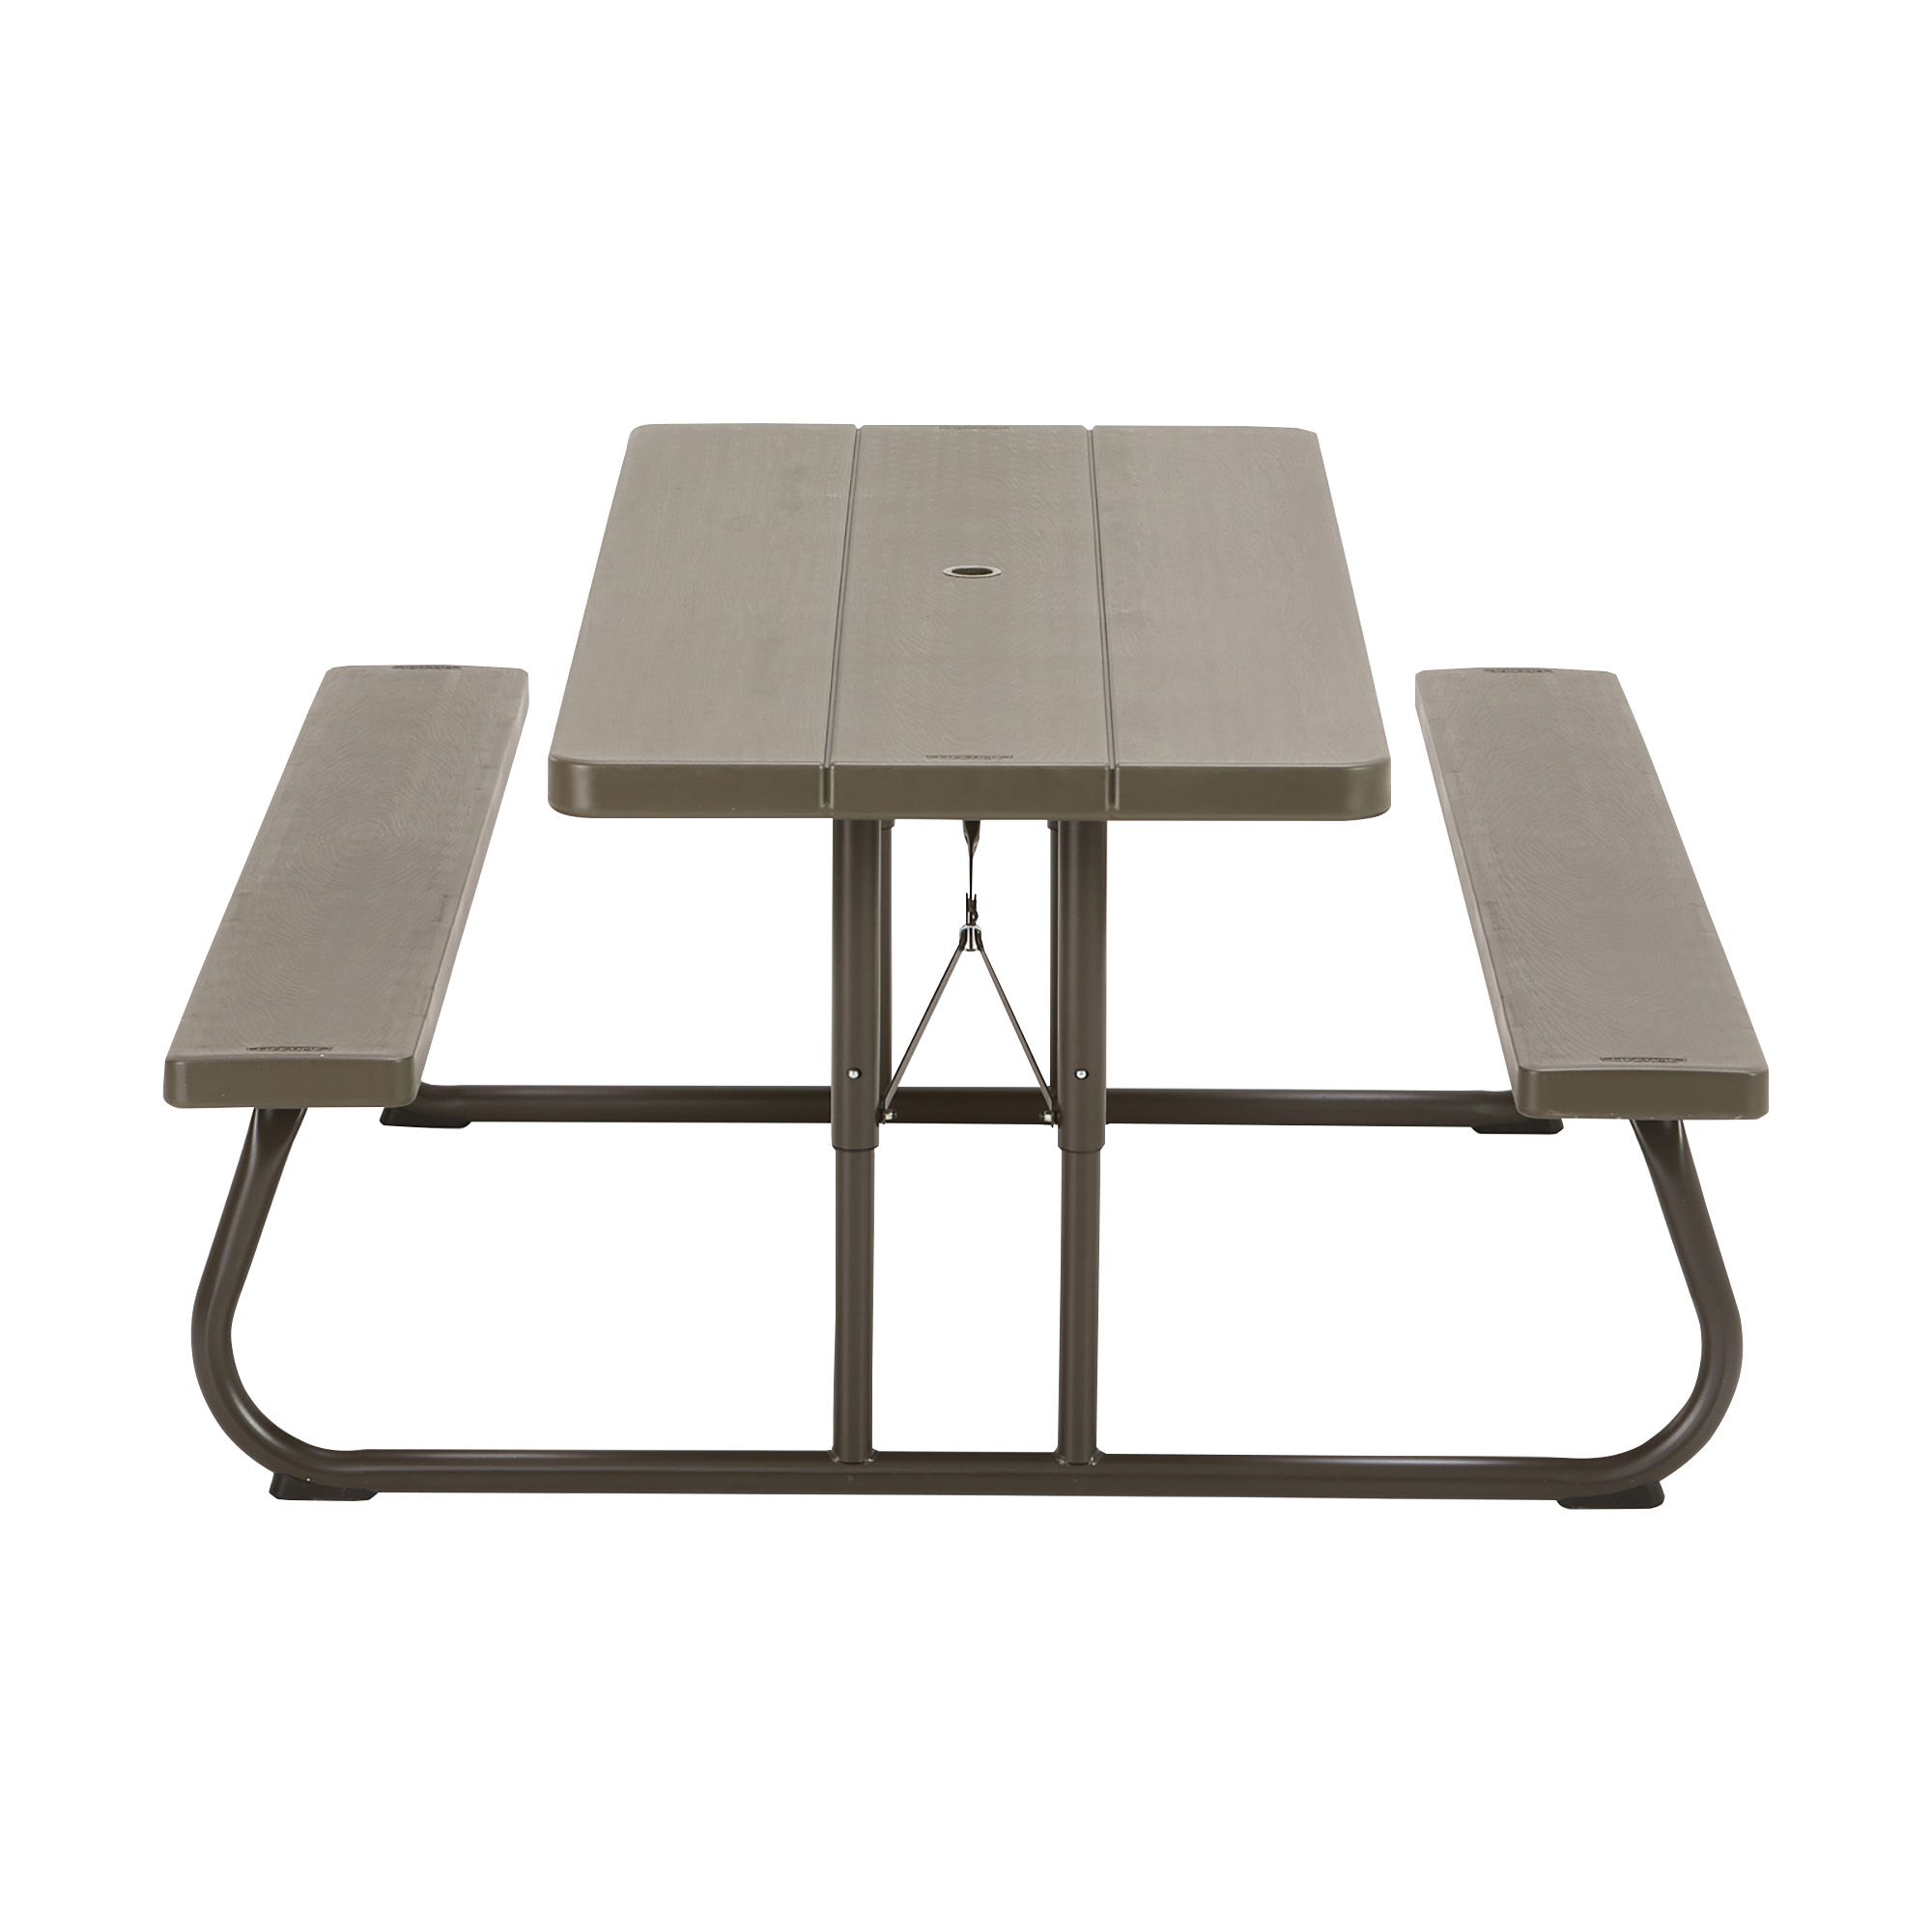 Lifetime 6ft Commercial Brown Folding Table 1pc